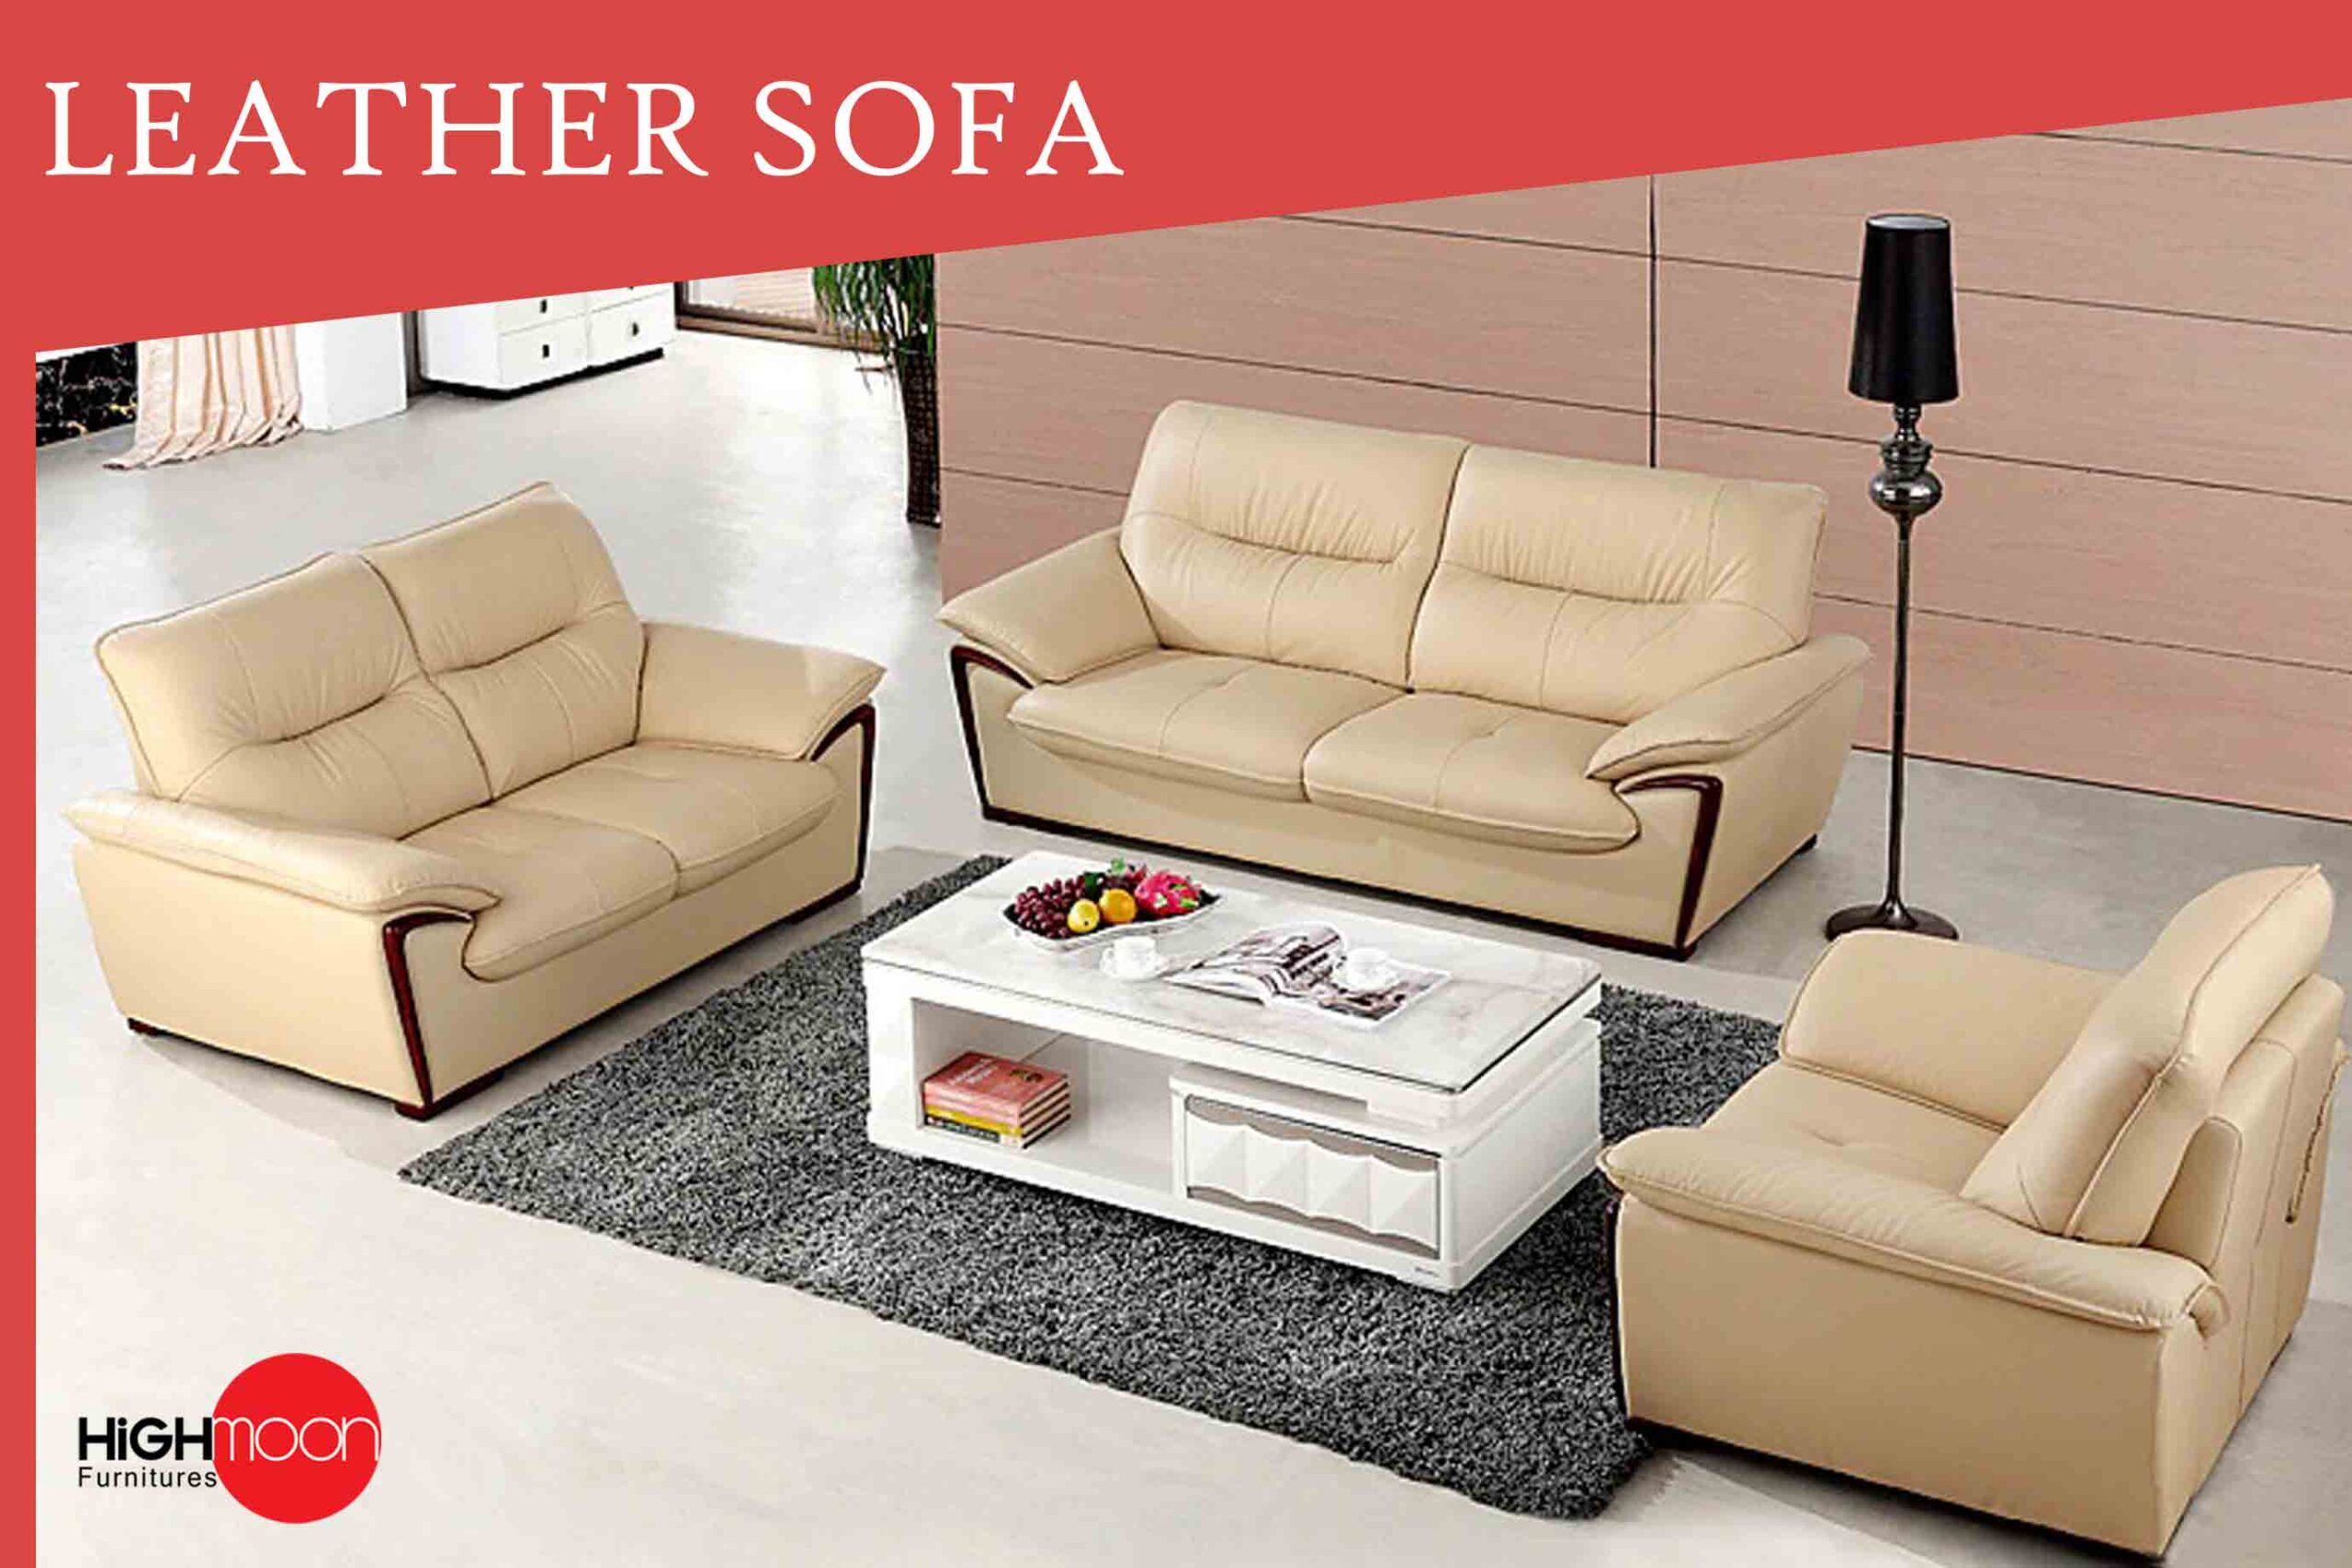 leather sofa online dubai